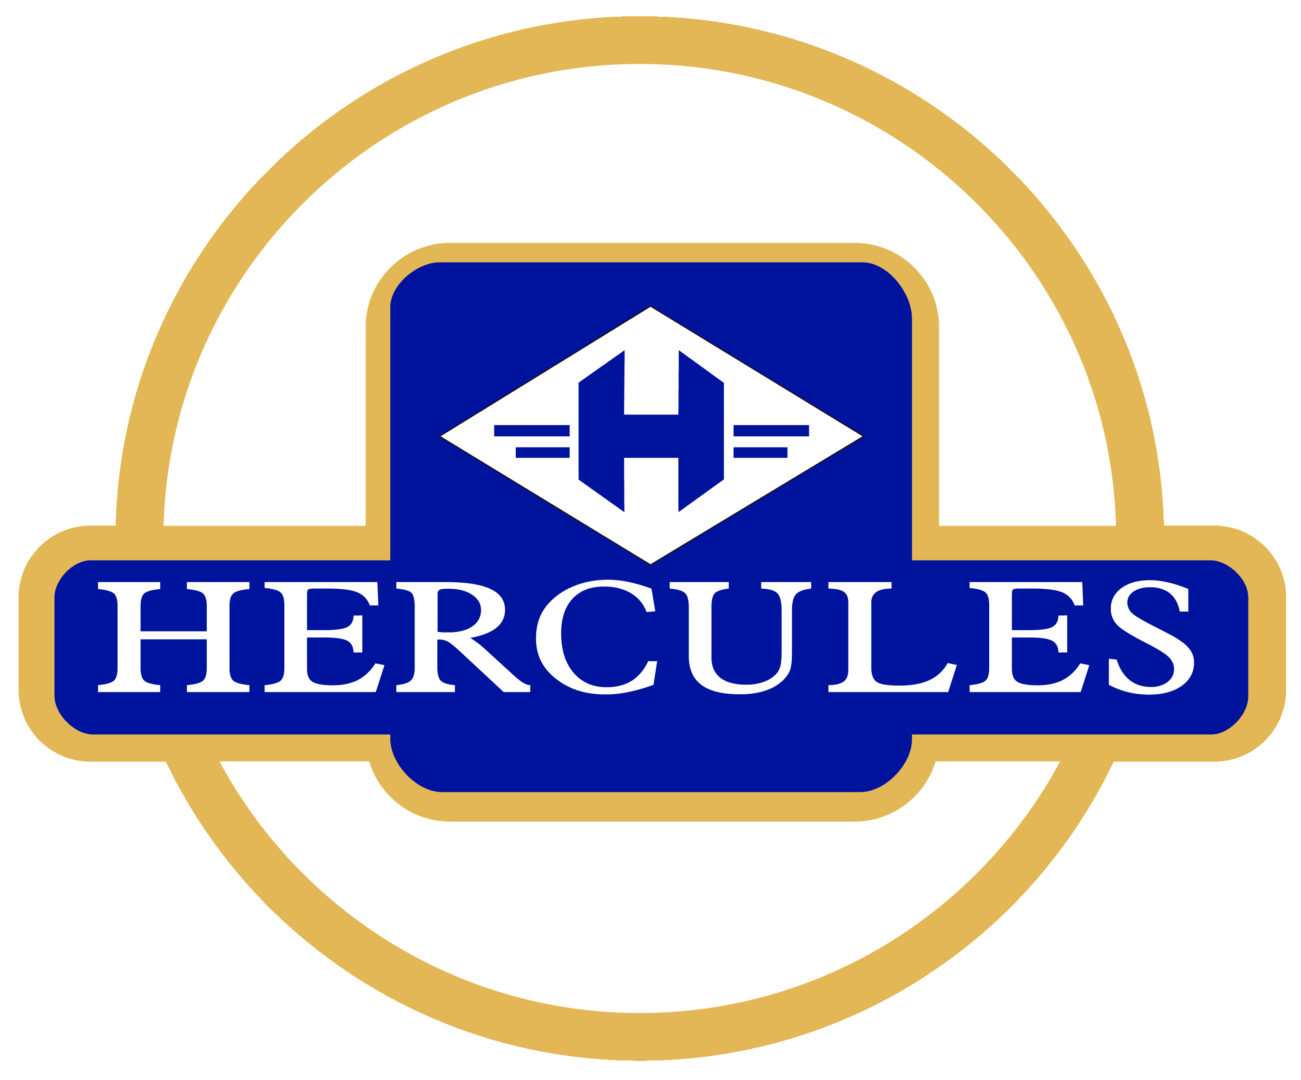 Hercules emblem